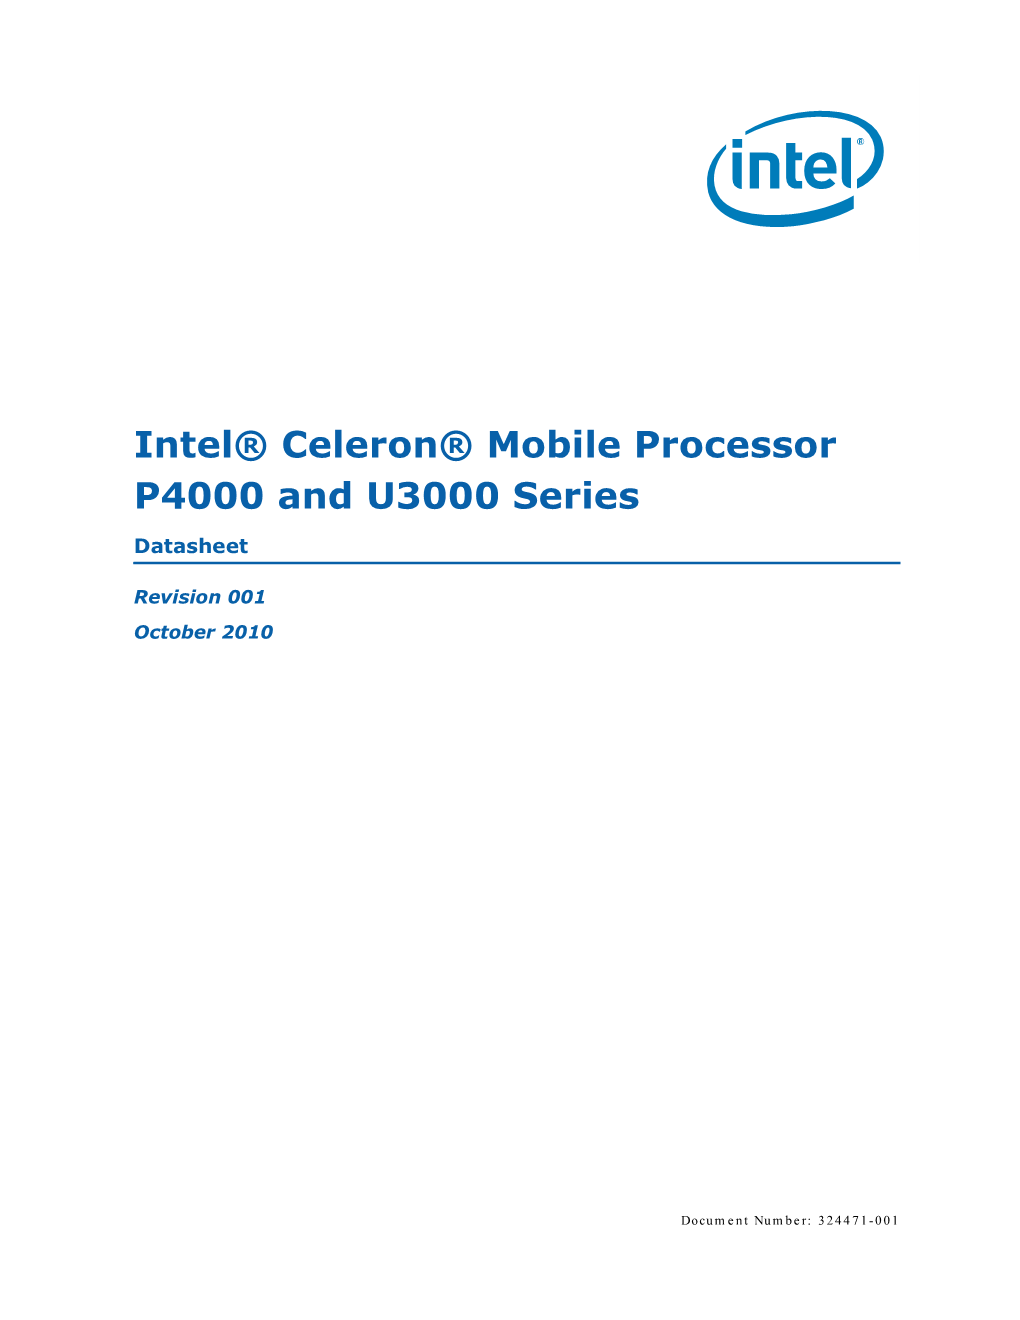 Intel® Celeron® Mobile Processor P4000 and U3000 Series